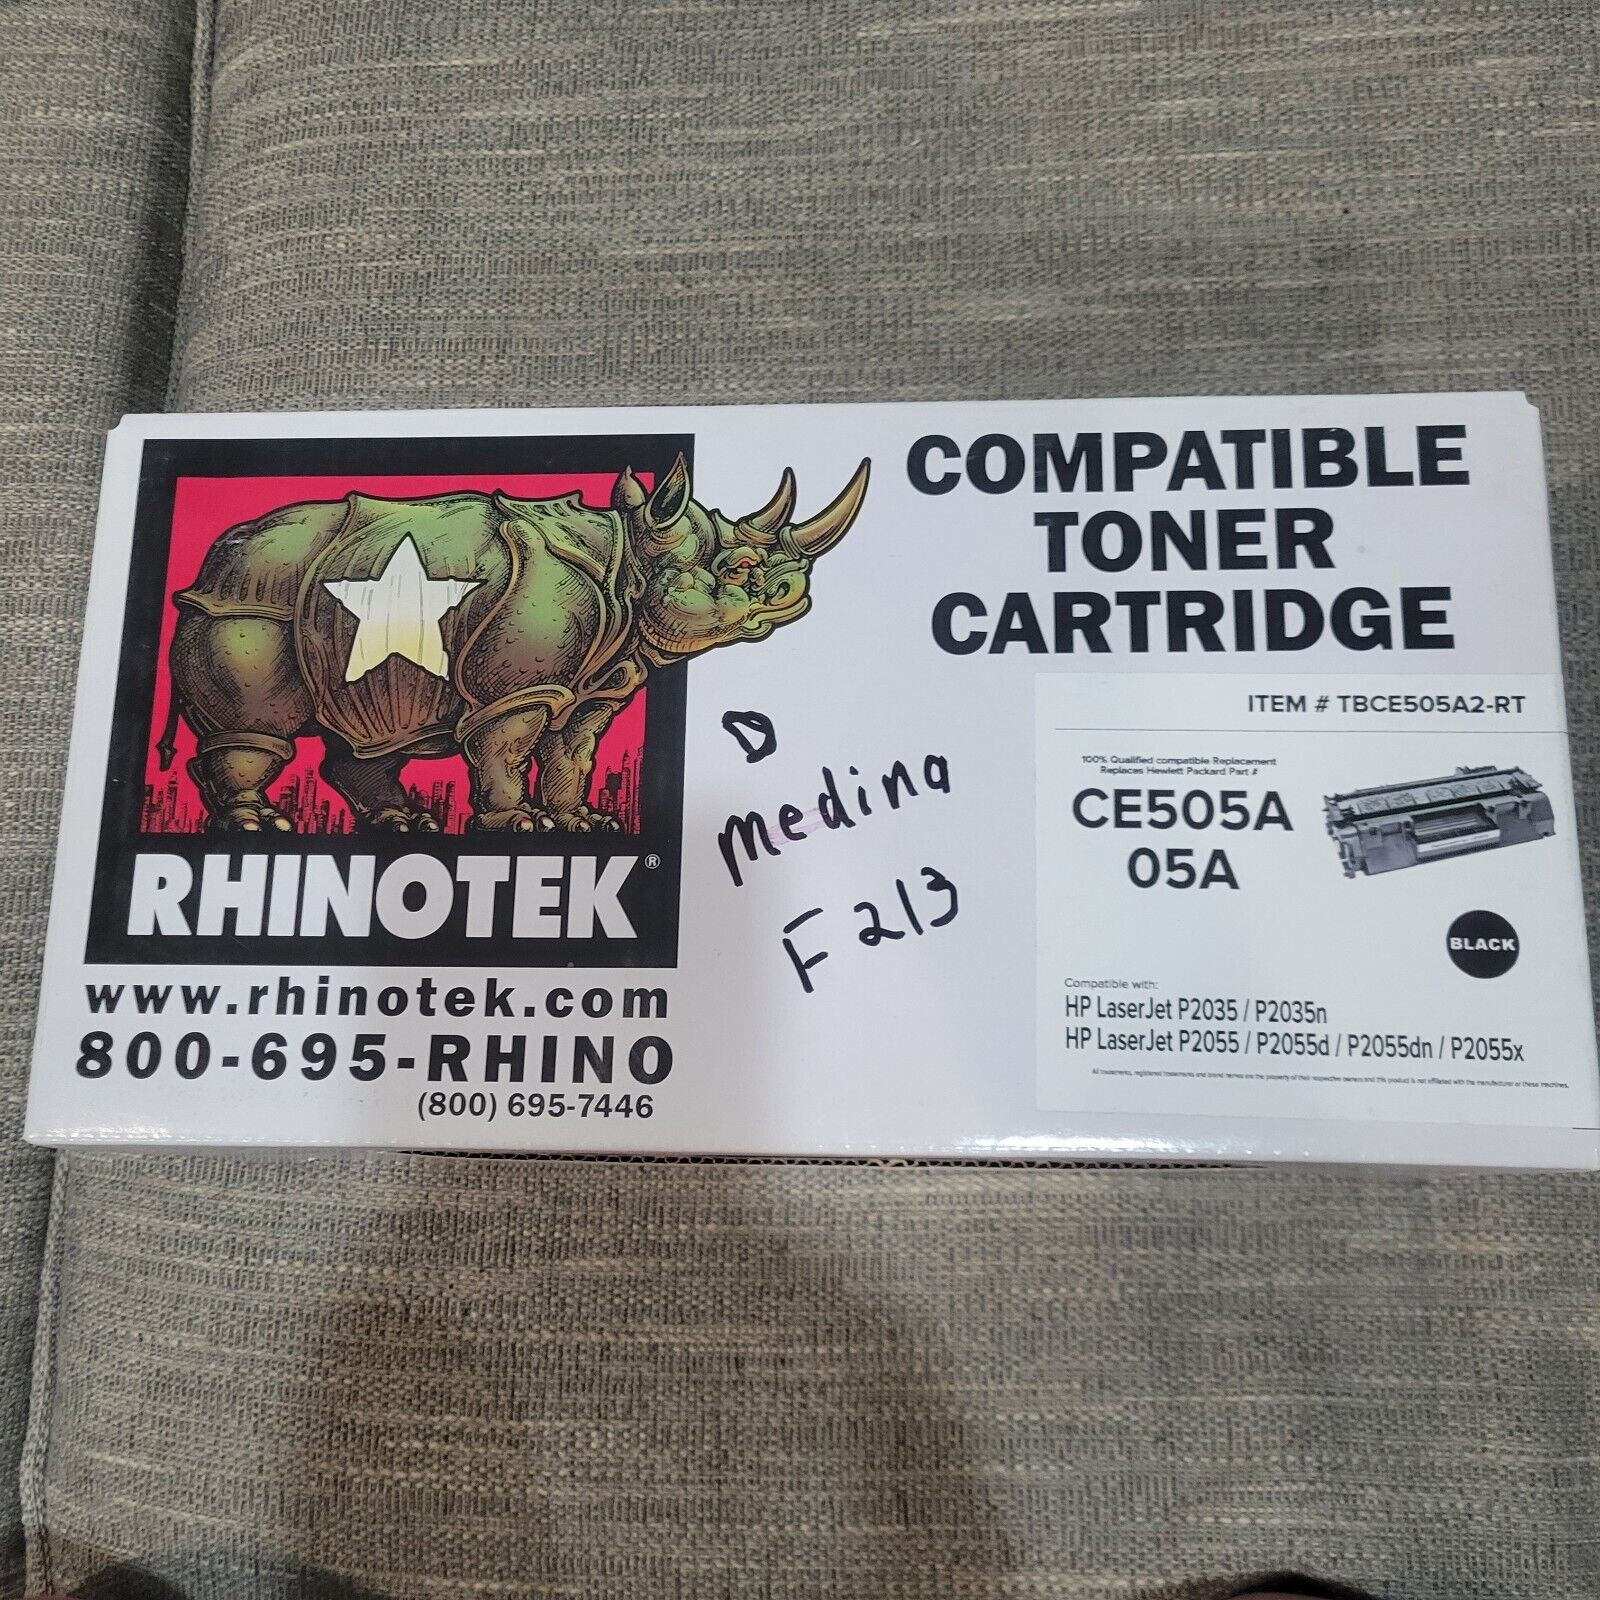 Rhinotek CE505A-RD  Laser Toner Cartridge - Black hp p2035 p2055 Compatible